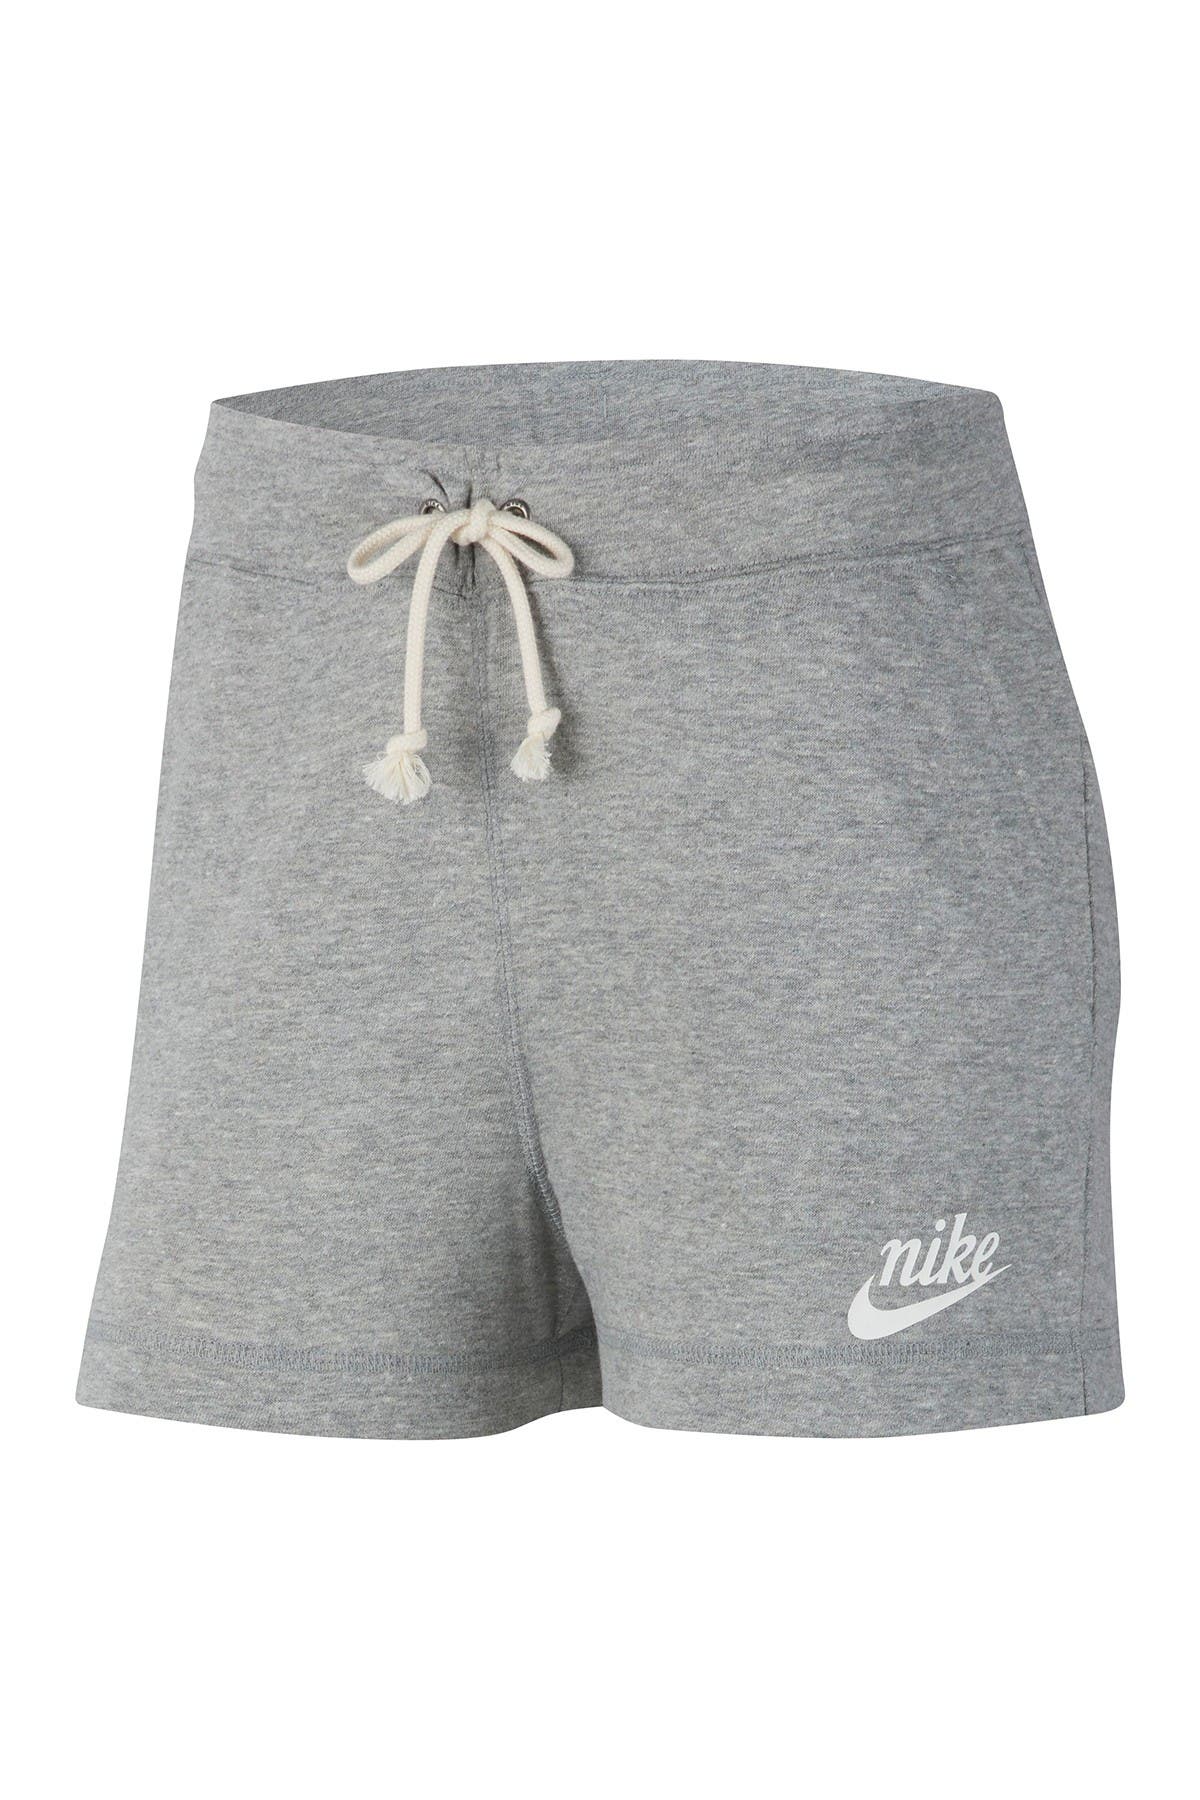 nordstrom nike shorts